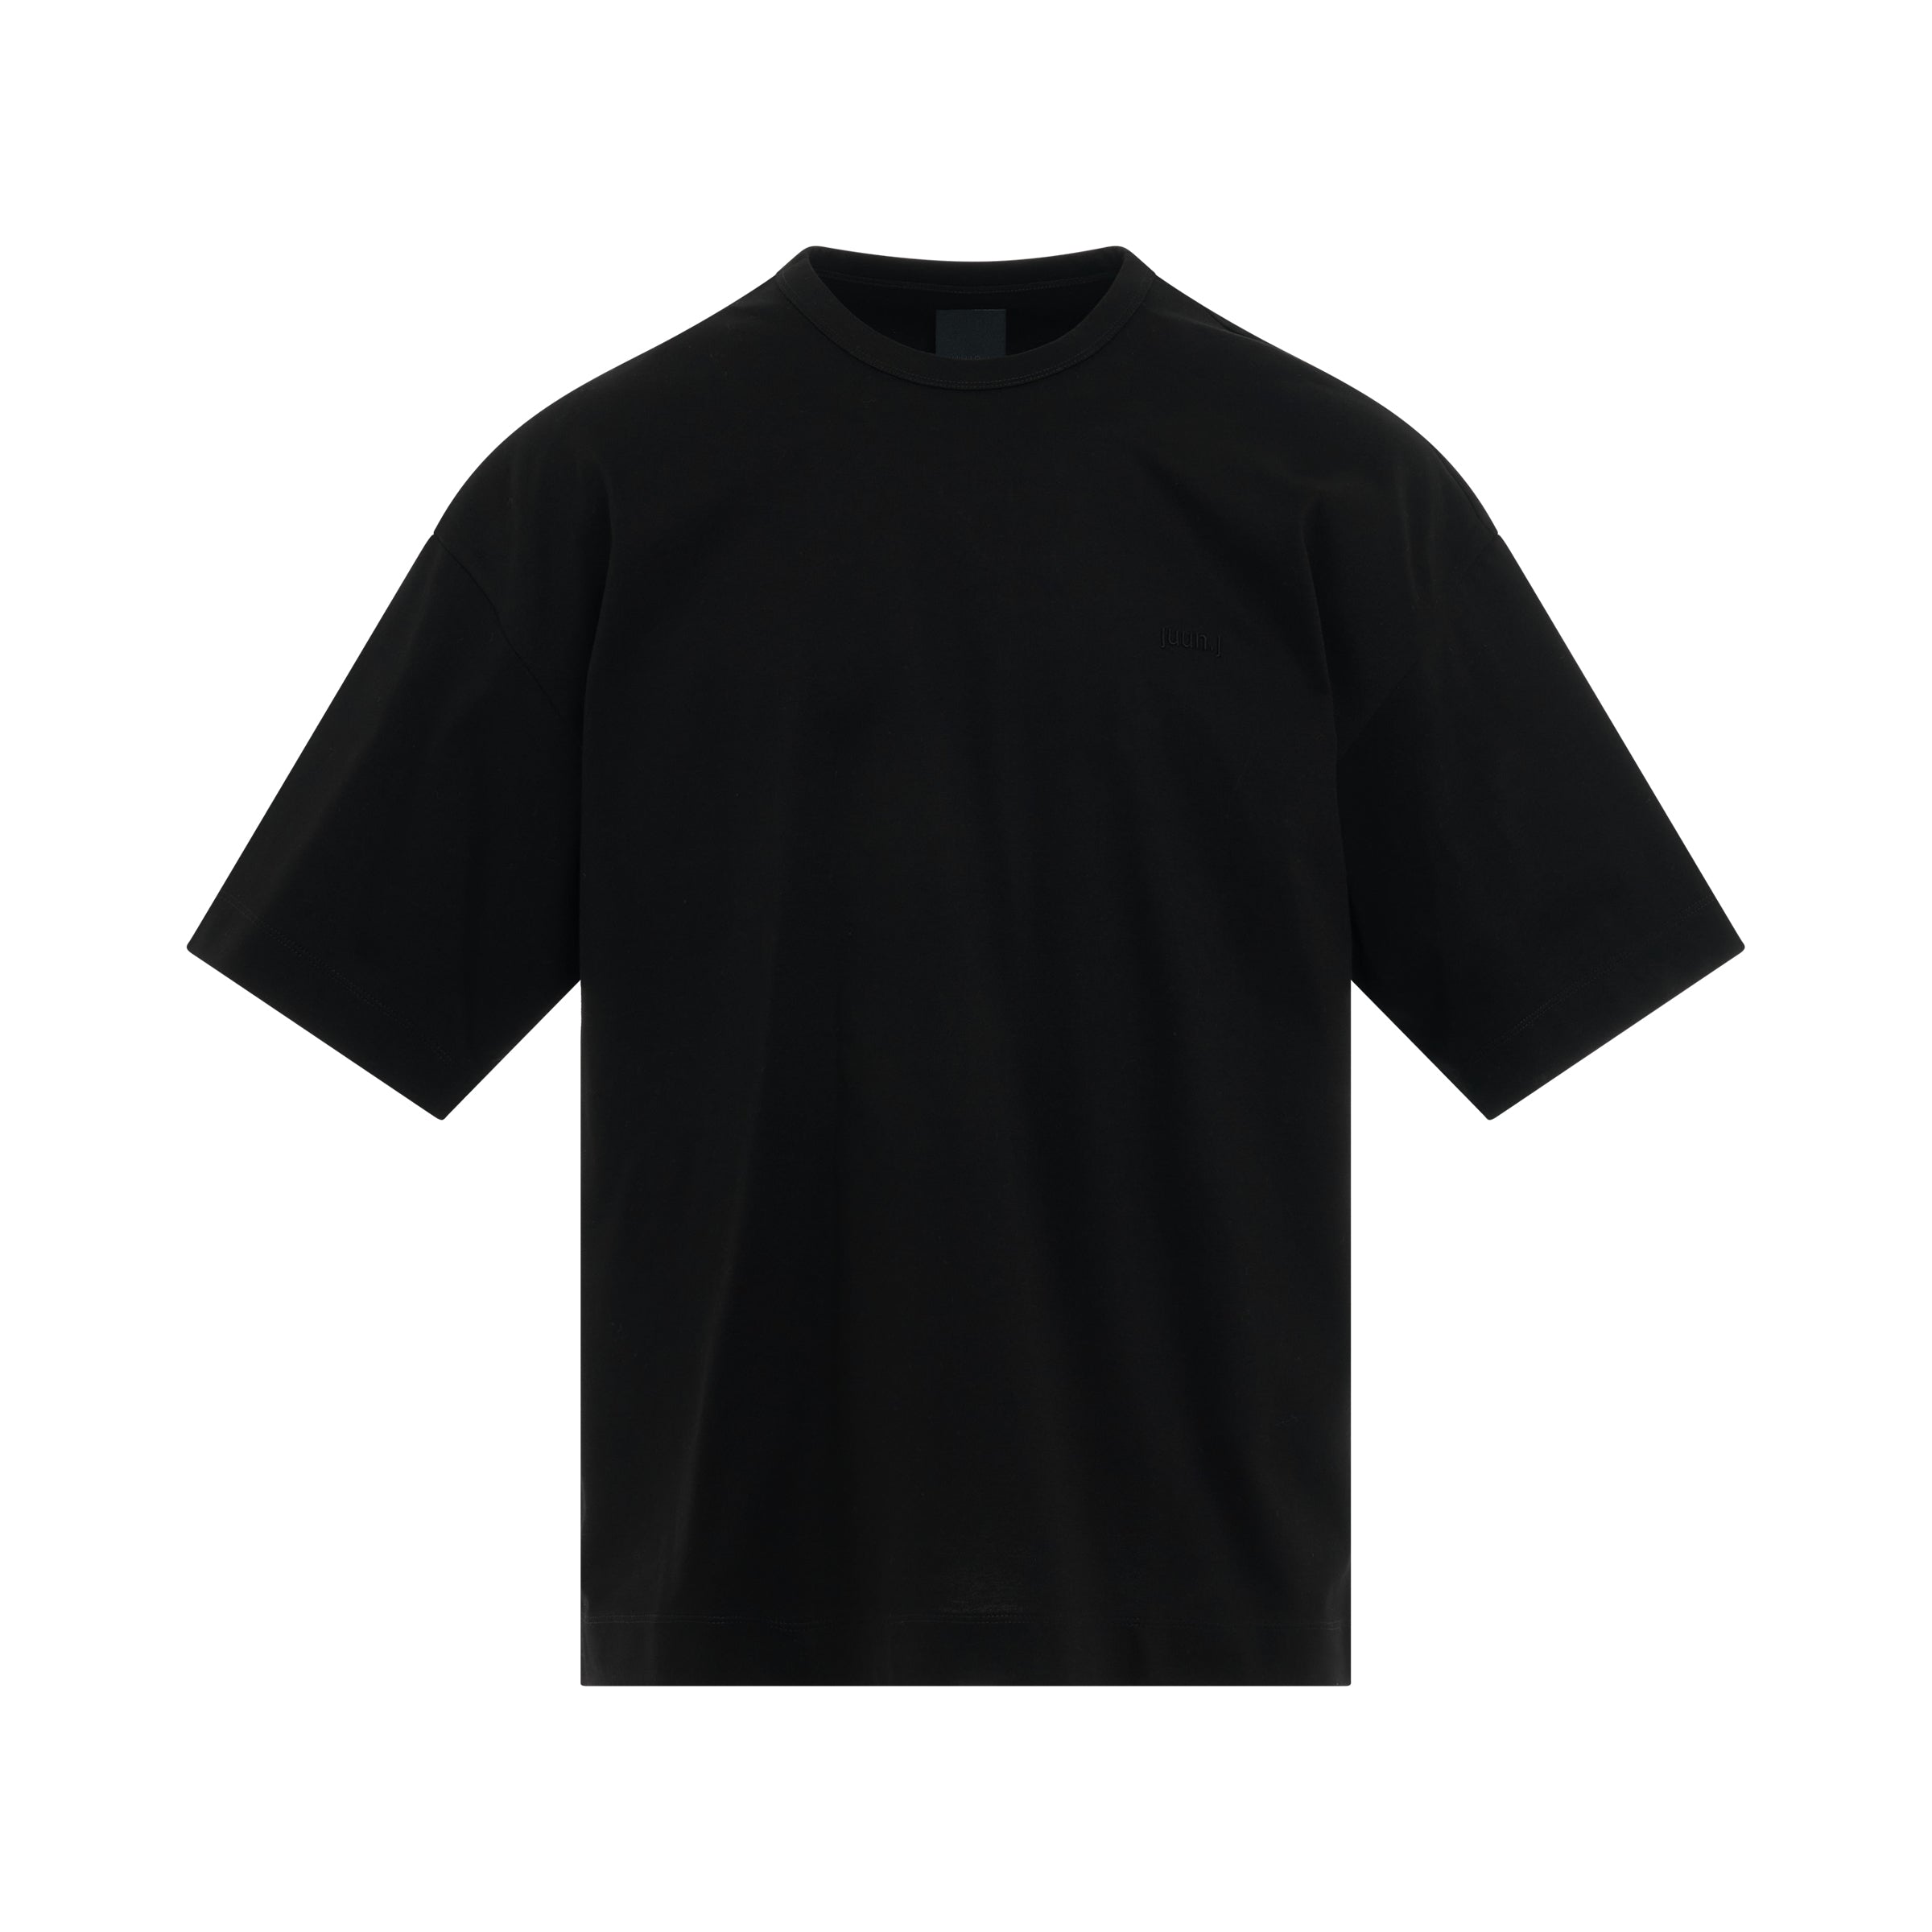 Australian Cotton Oversized T-Shirt - Black